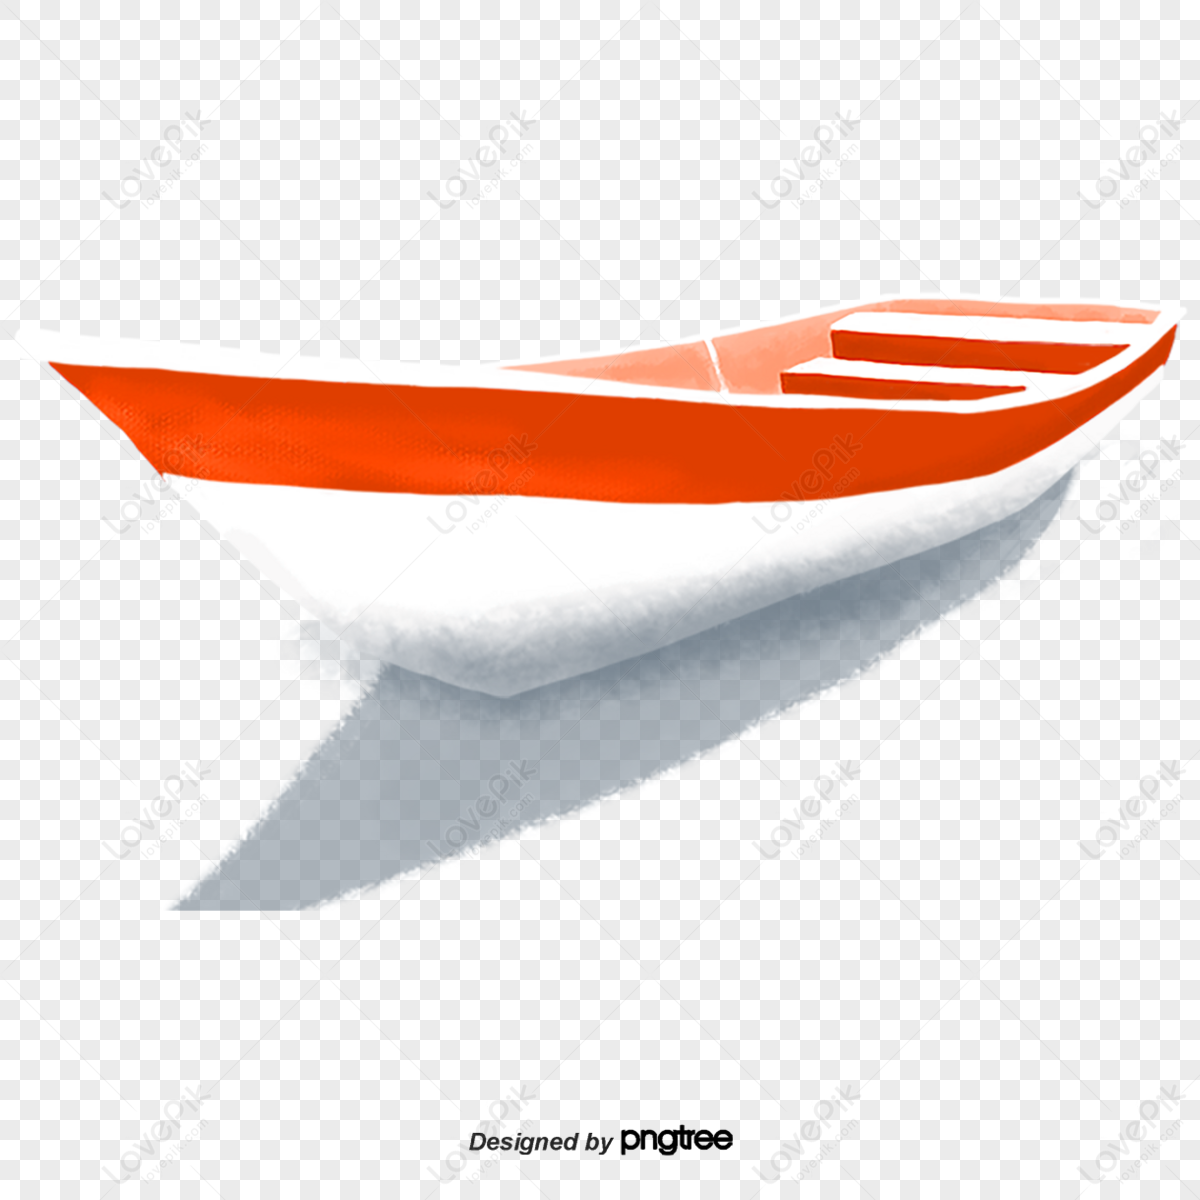 A cartoon orange boat,scenes,river water,row png image